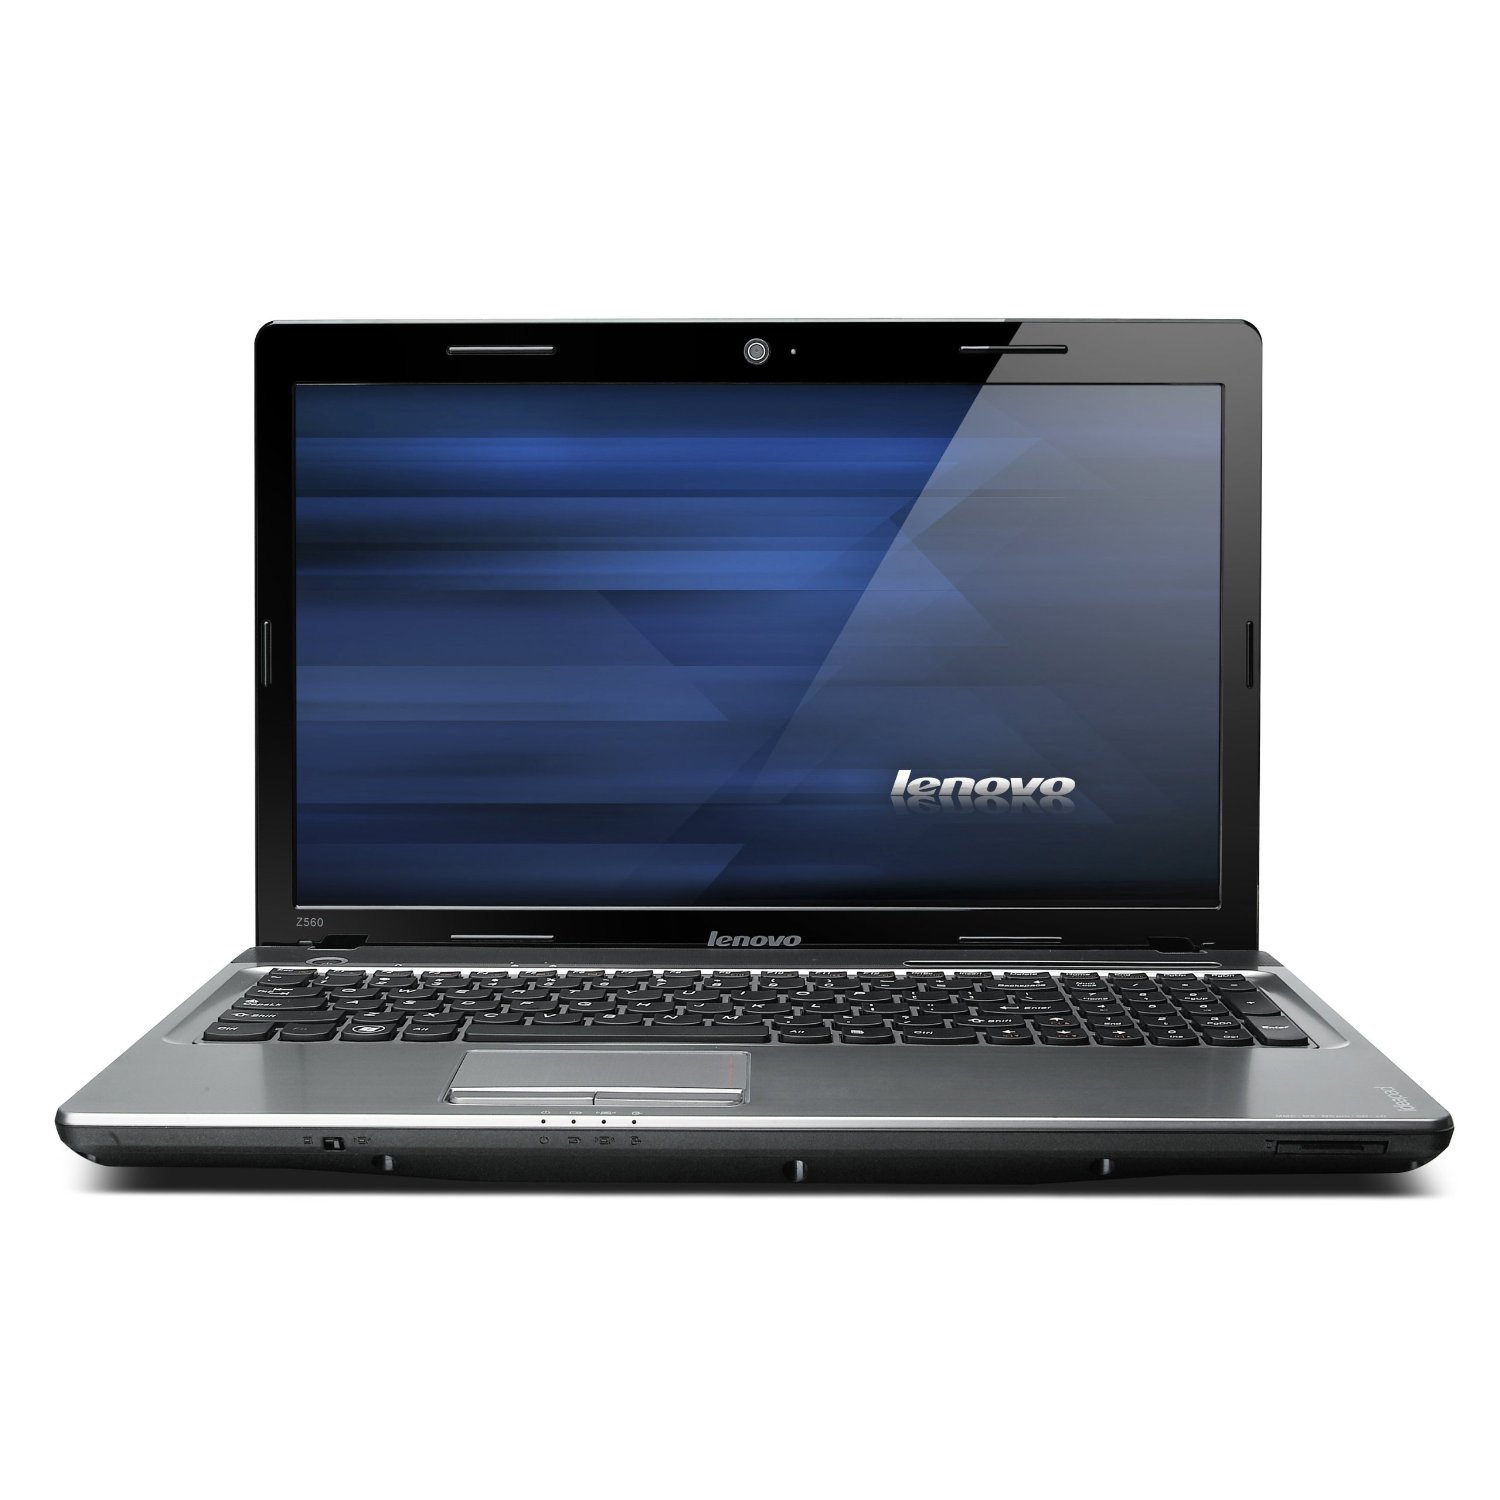 Lenovo IdeaPad Z560-0914-3YU - Notebookcheck.net External Reviews